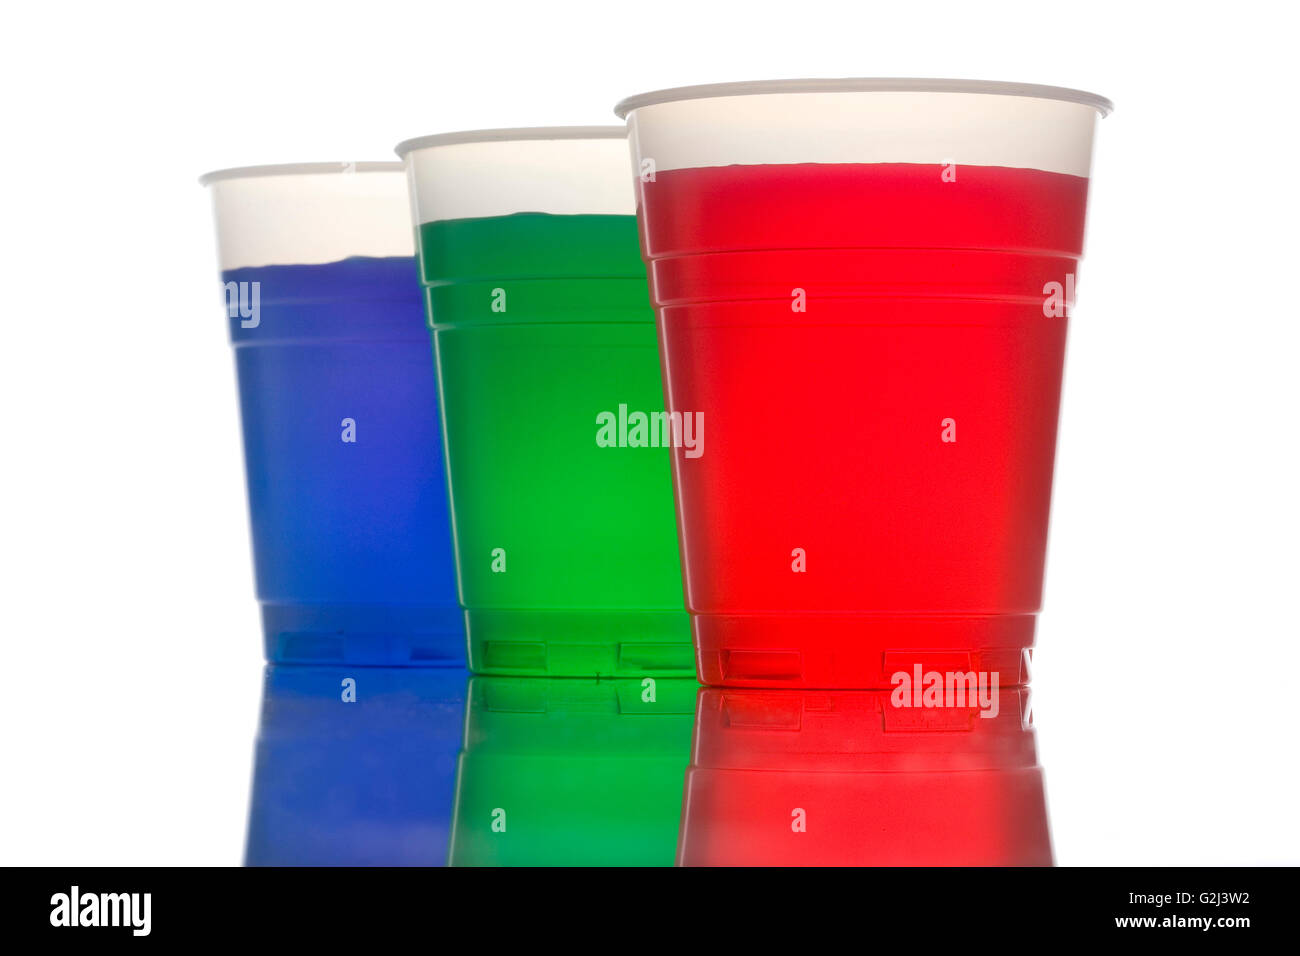 https://c8.alamy.com/comp/G2J3W2/plastic-cups-with-red-green-blue-liquid-G2J3W2.jpg